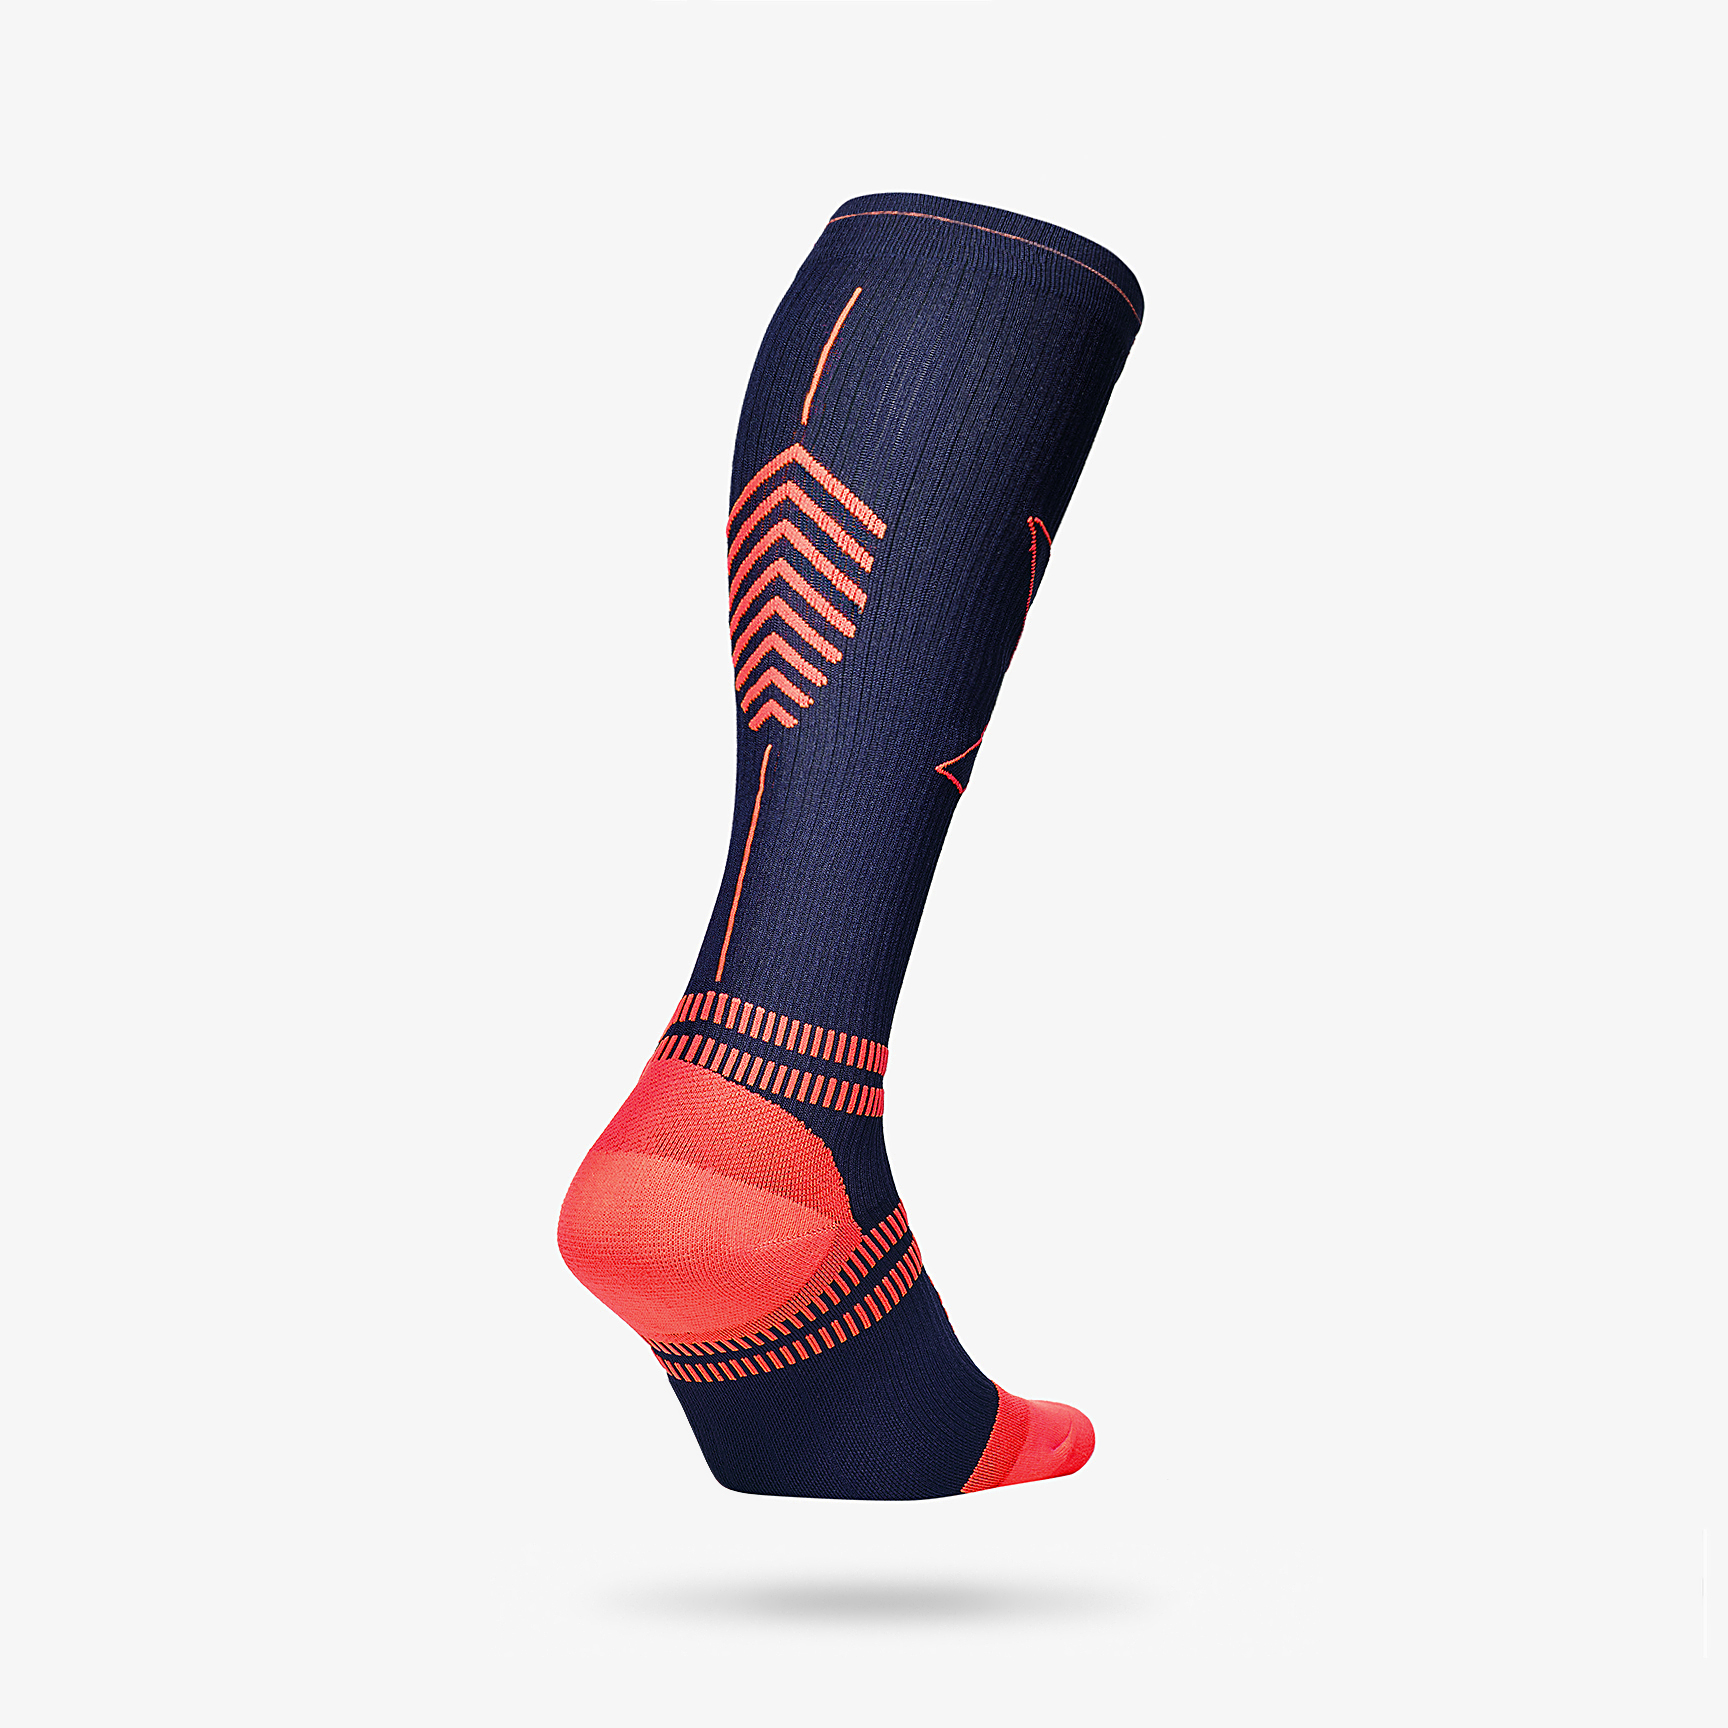 24" Details about   NEW High Five Athletic Sport Socks Color Navy Blue Size M Medium NWOT 